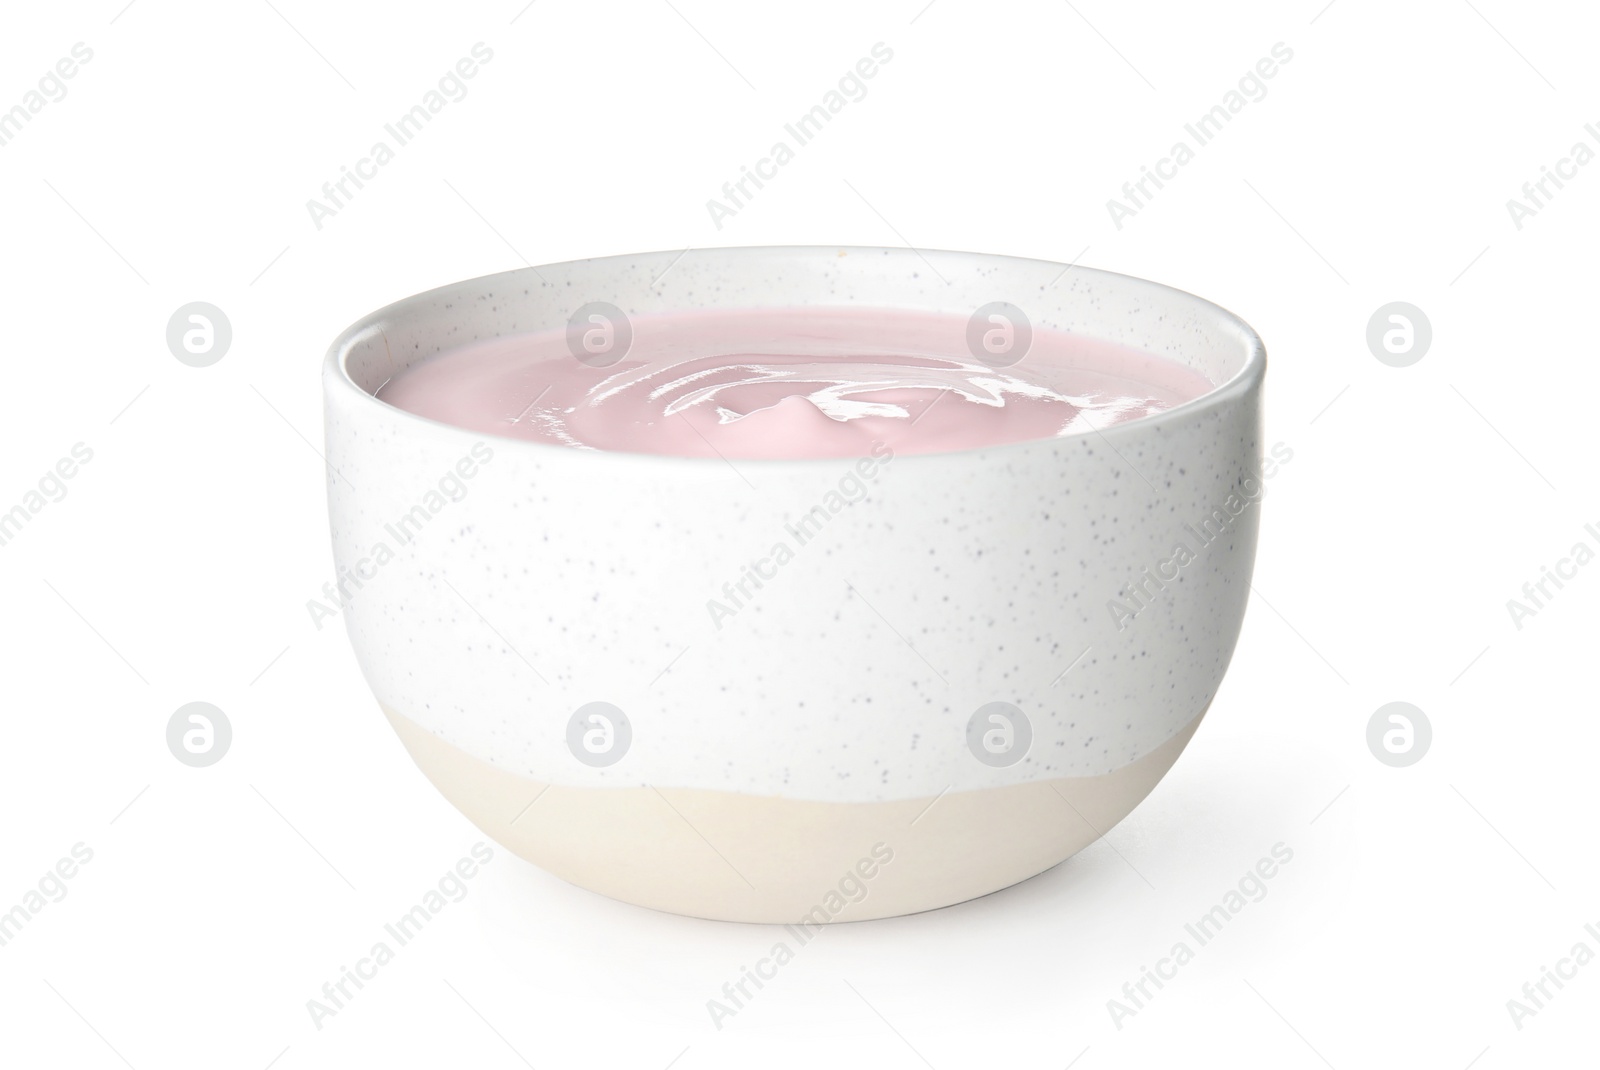 Photo of Bowl with creamy yogurt on white background